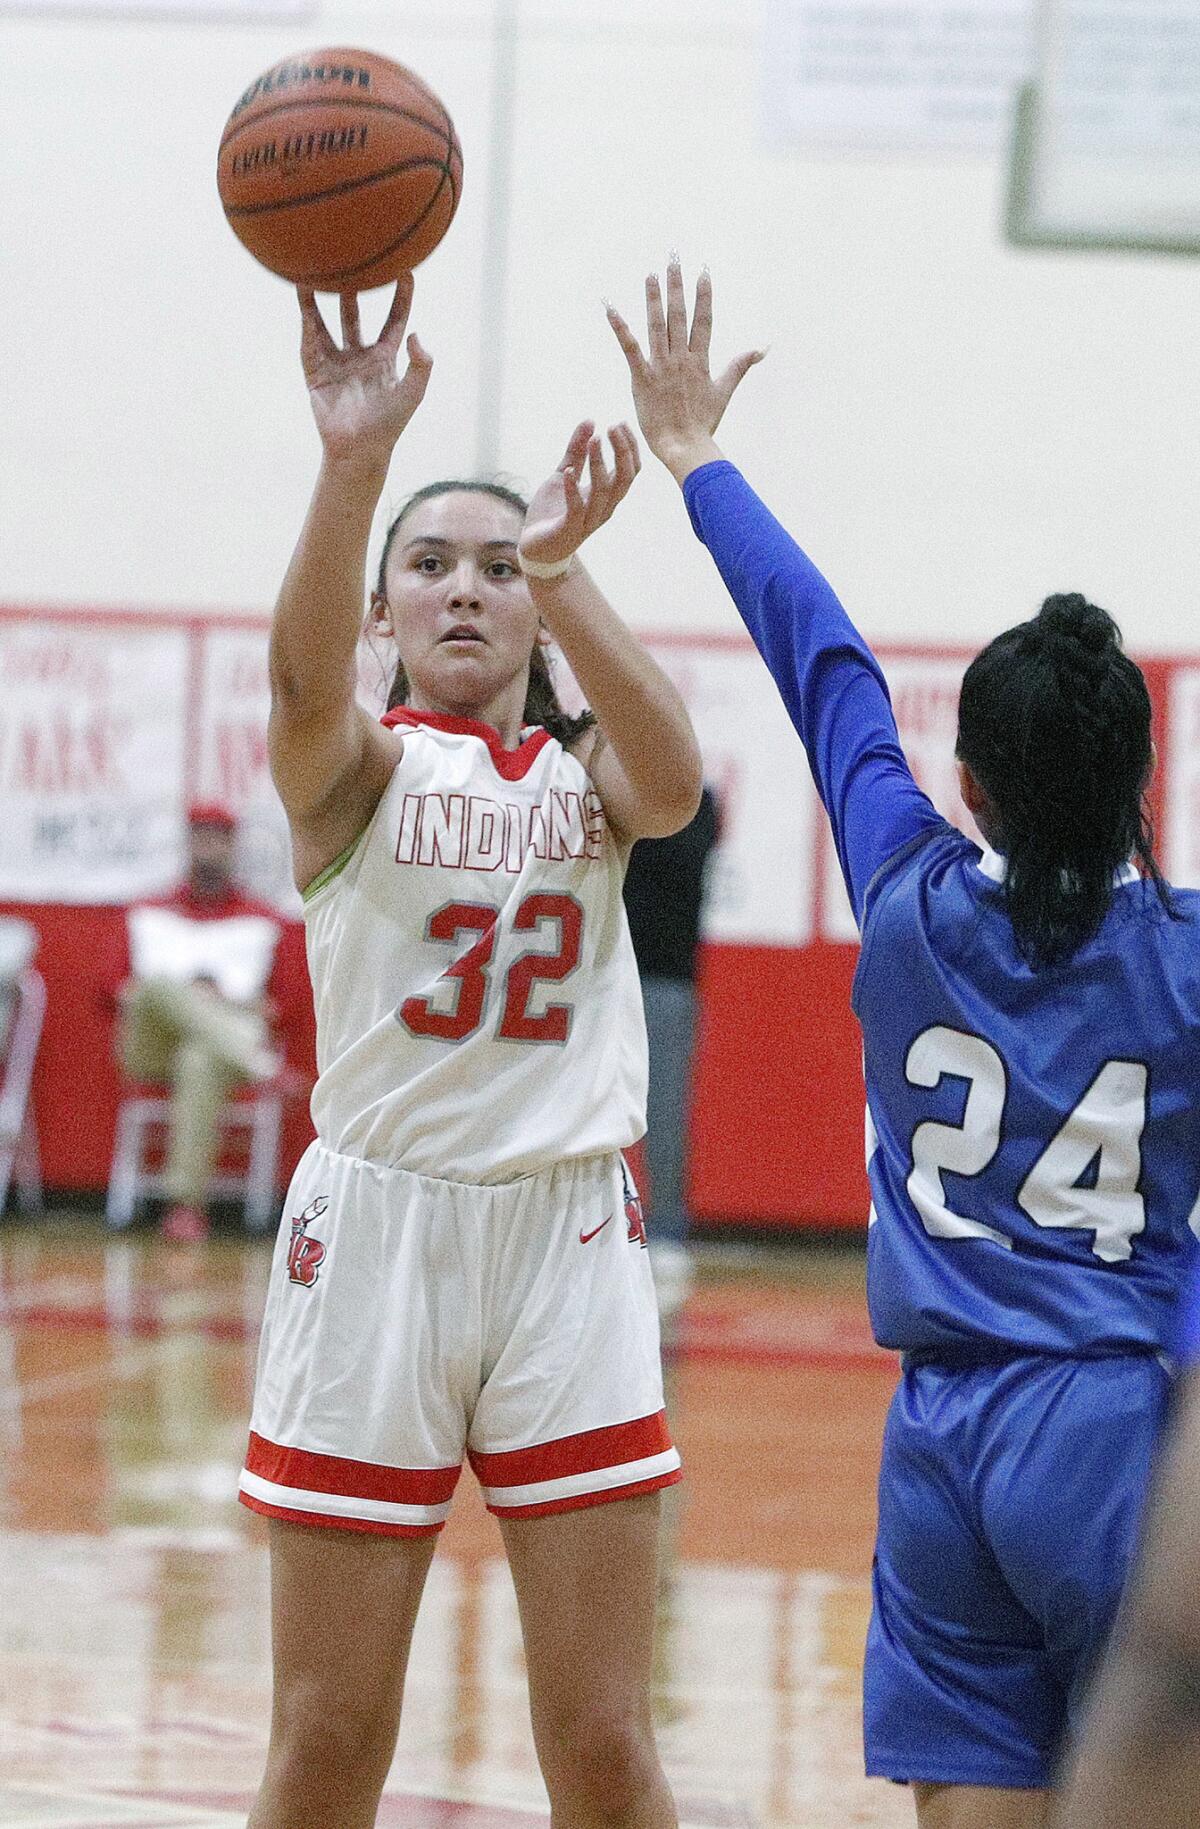 Faith Boulanger is a key returner this season for the Burroughs High girls' basketball team.